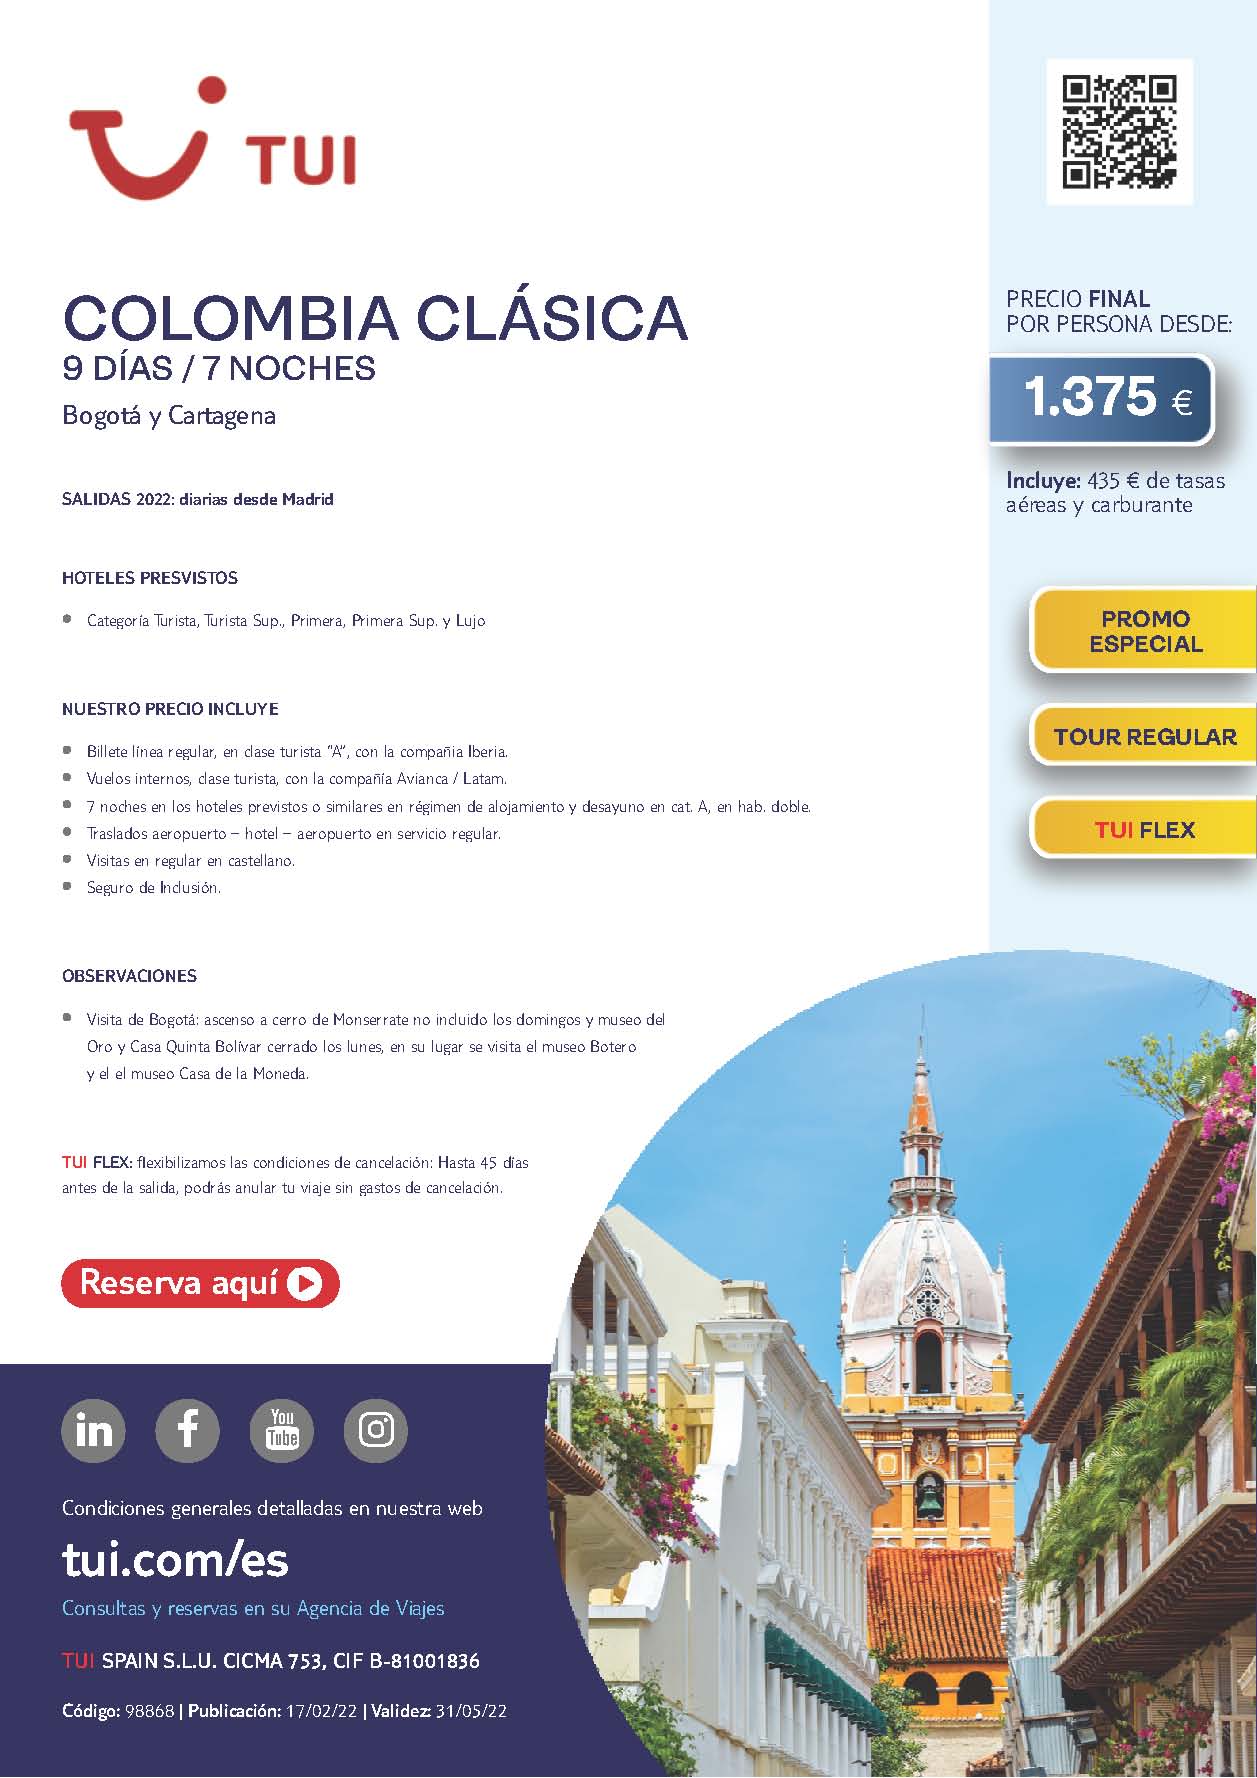 Oferta TUI Primavera 2022 Colombia Clasica 9 dias salidas desde Madrid vuelos directos Iberia